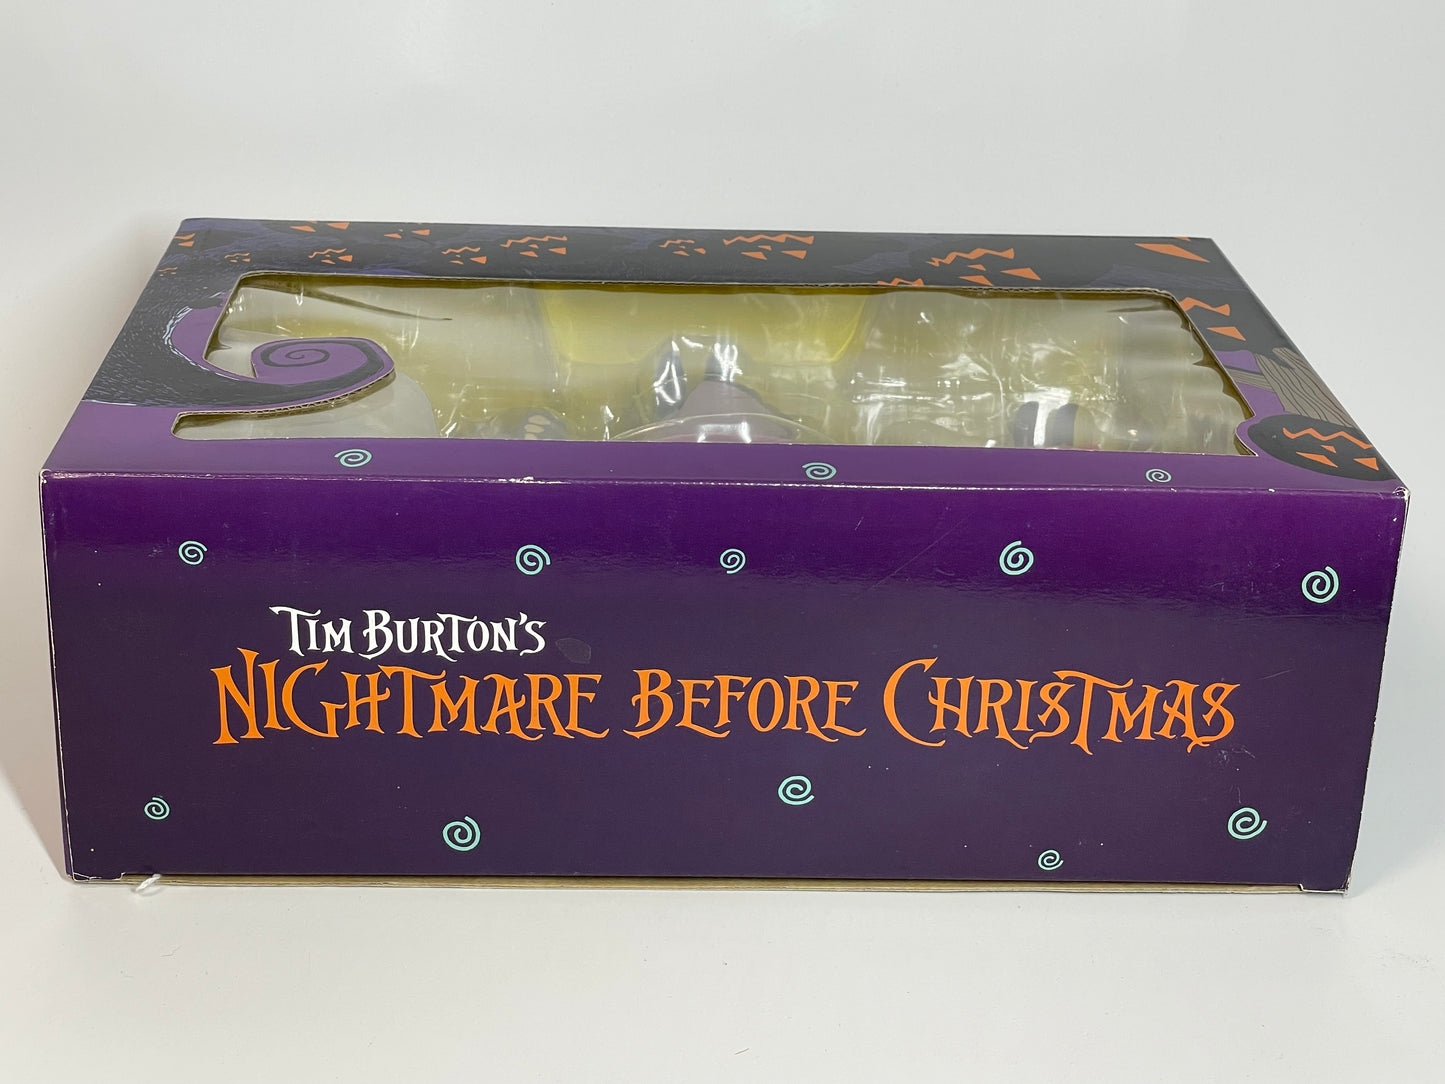 Nightmare Before Christmas - Lock, Shock & Barrel Figures 1998 #103546